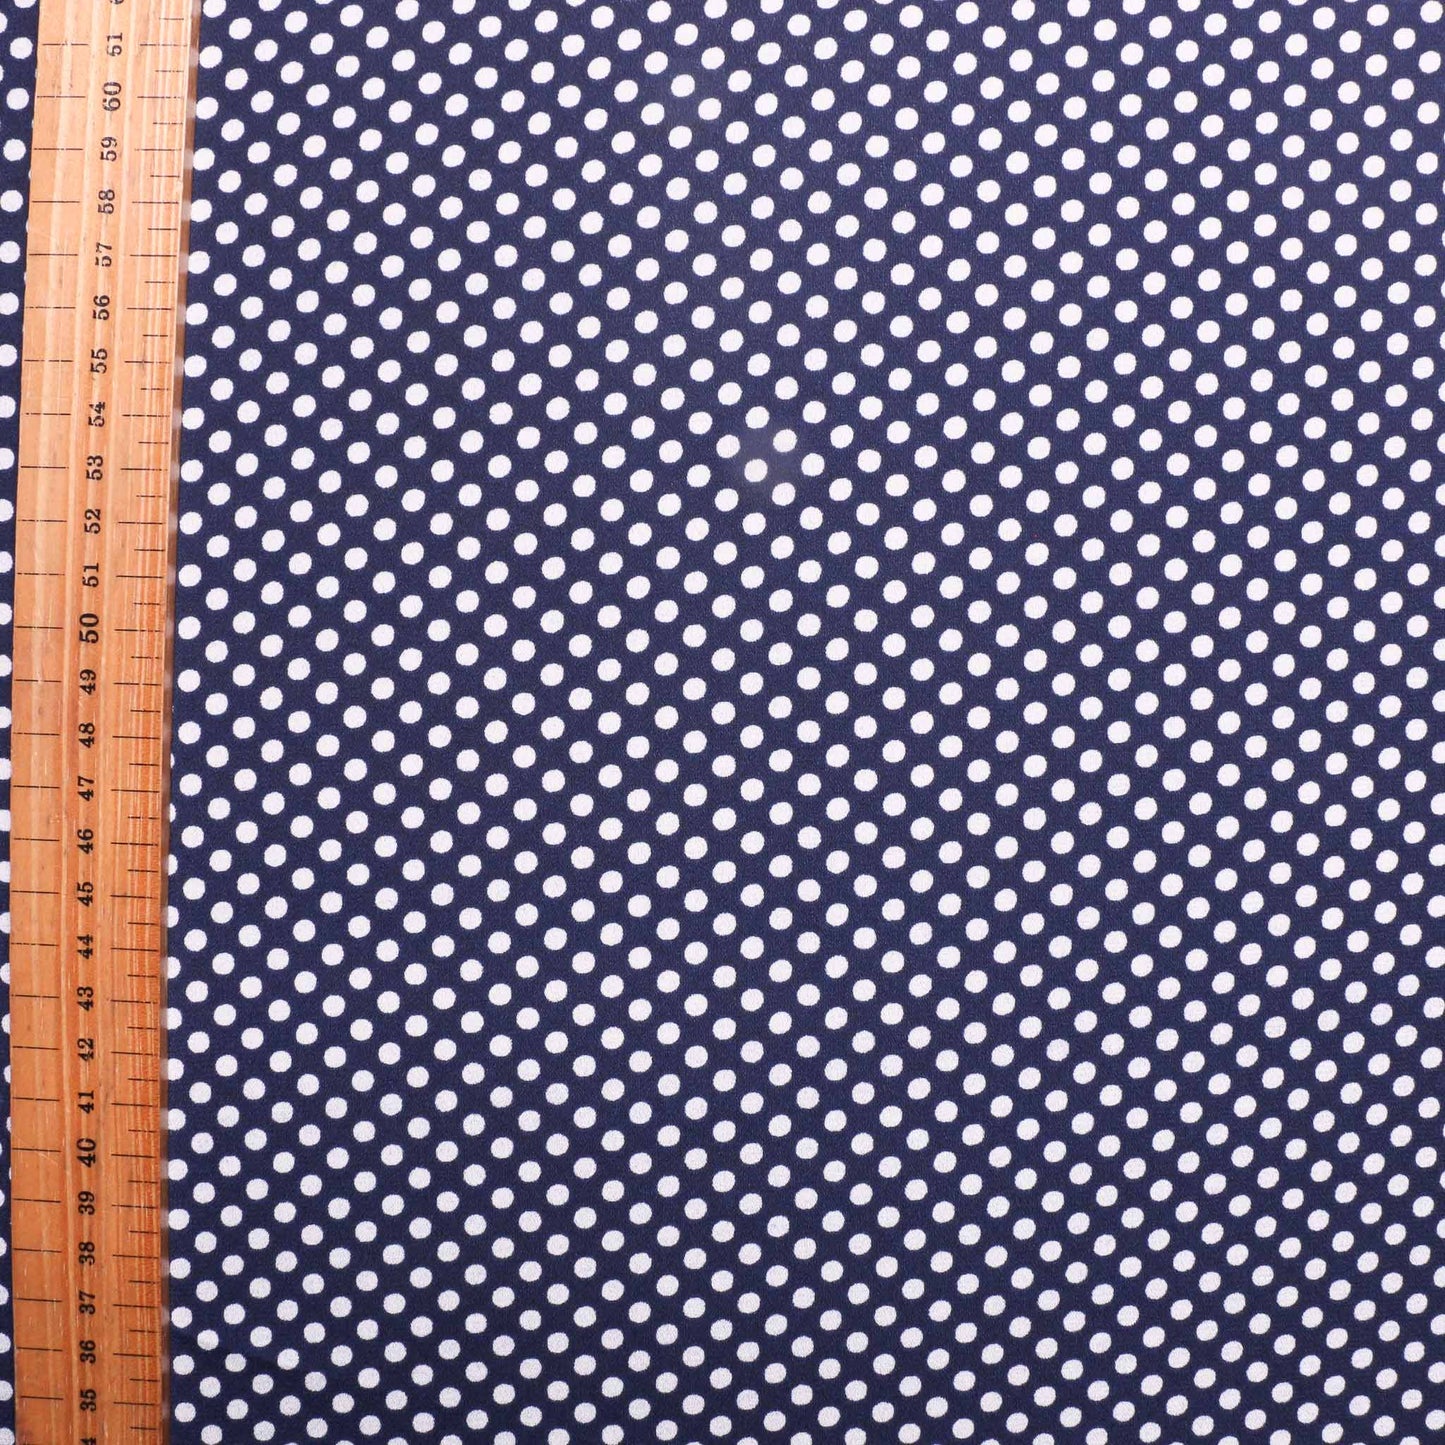 metre polka dot dressmaking fabric in navy and white uk